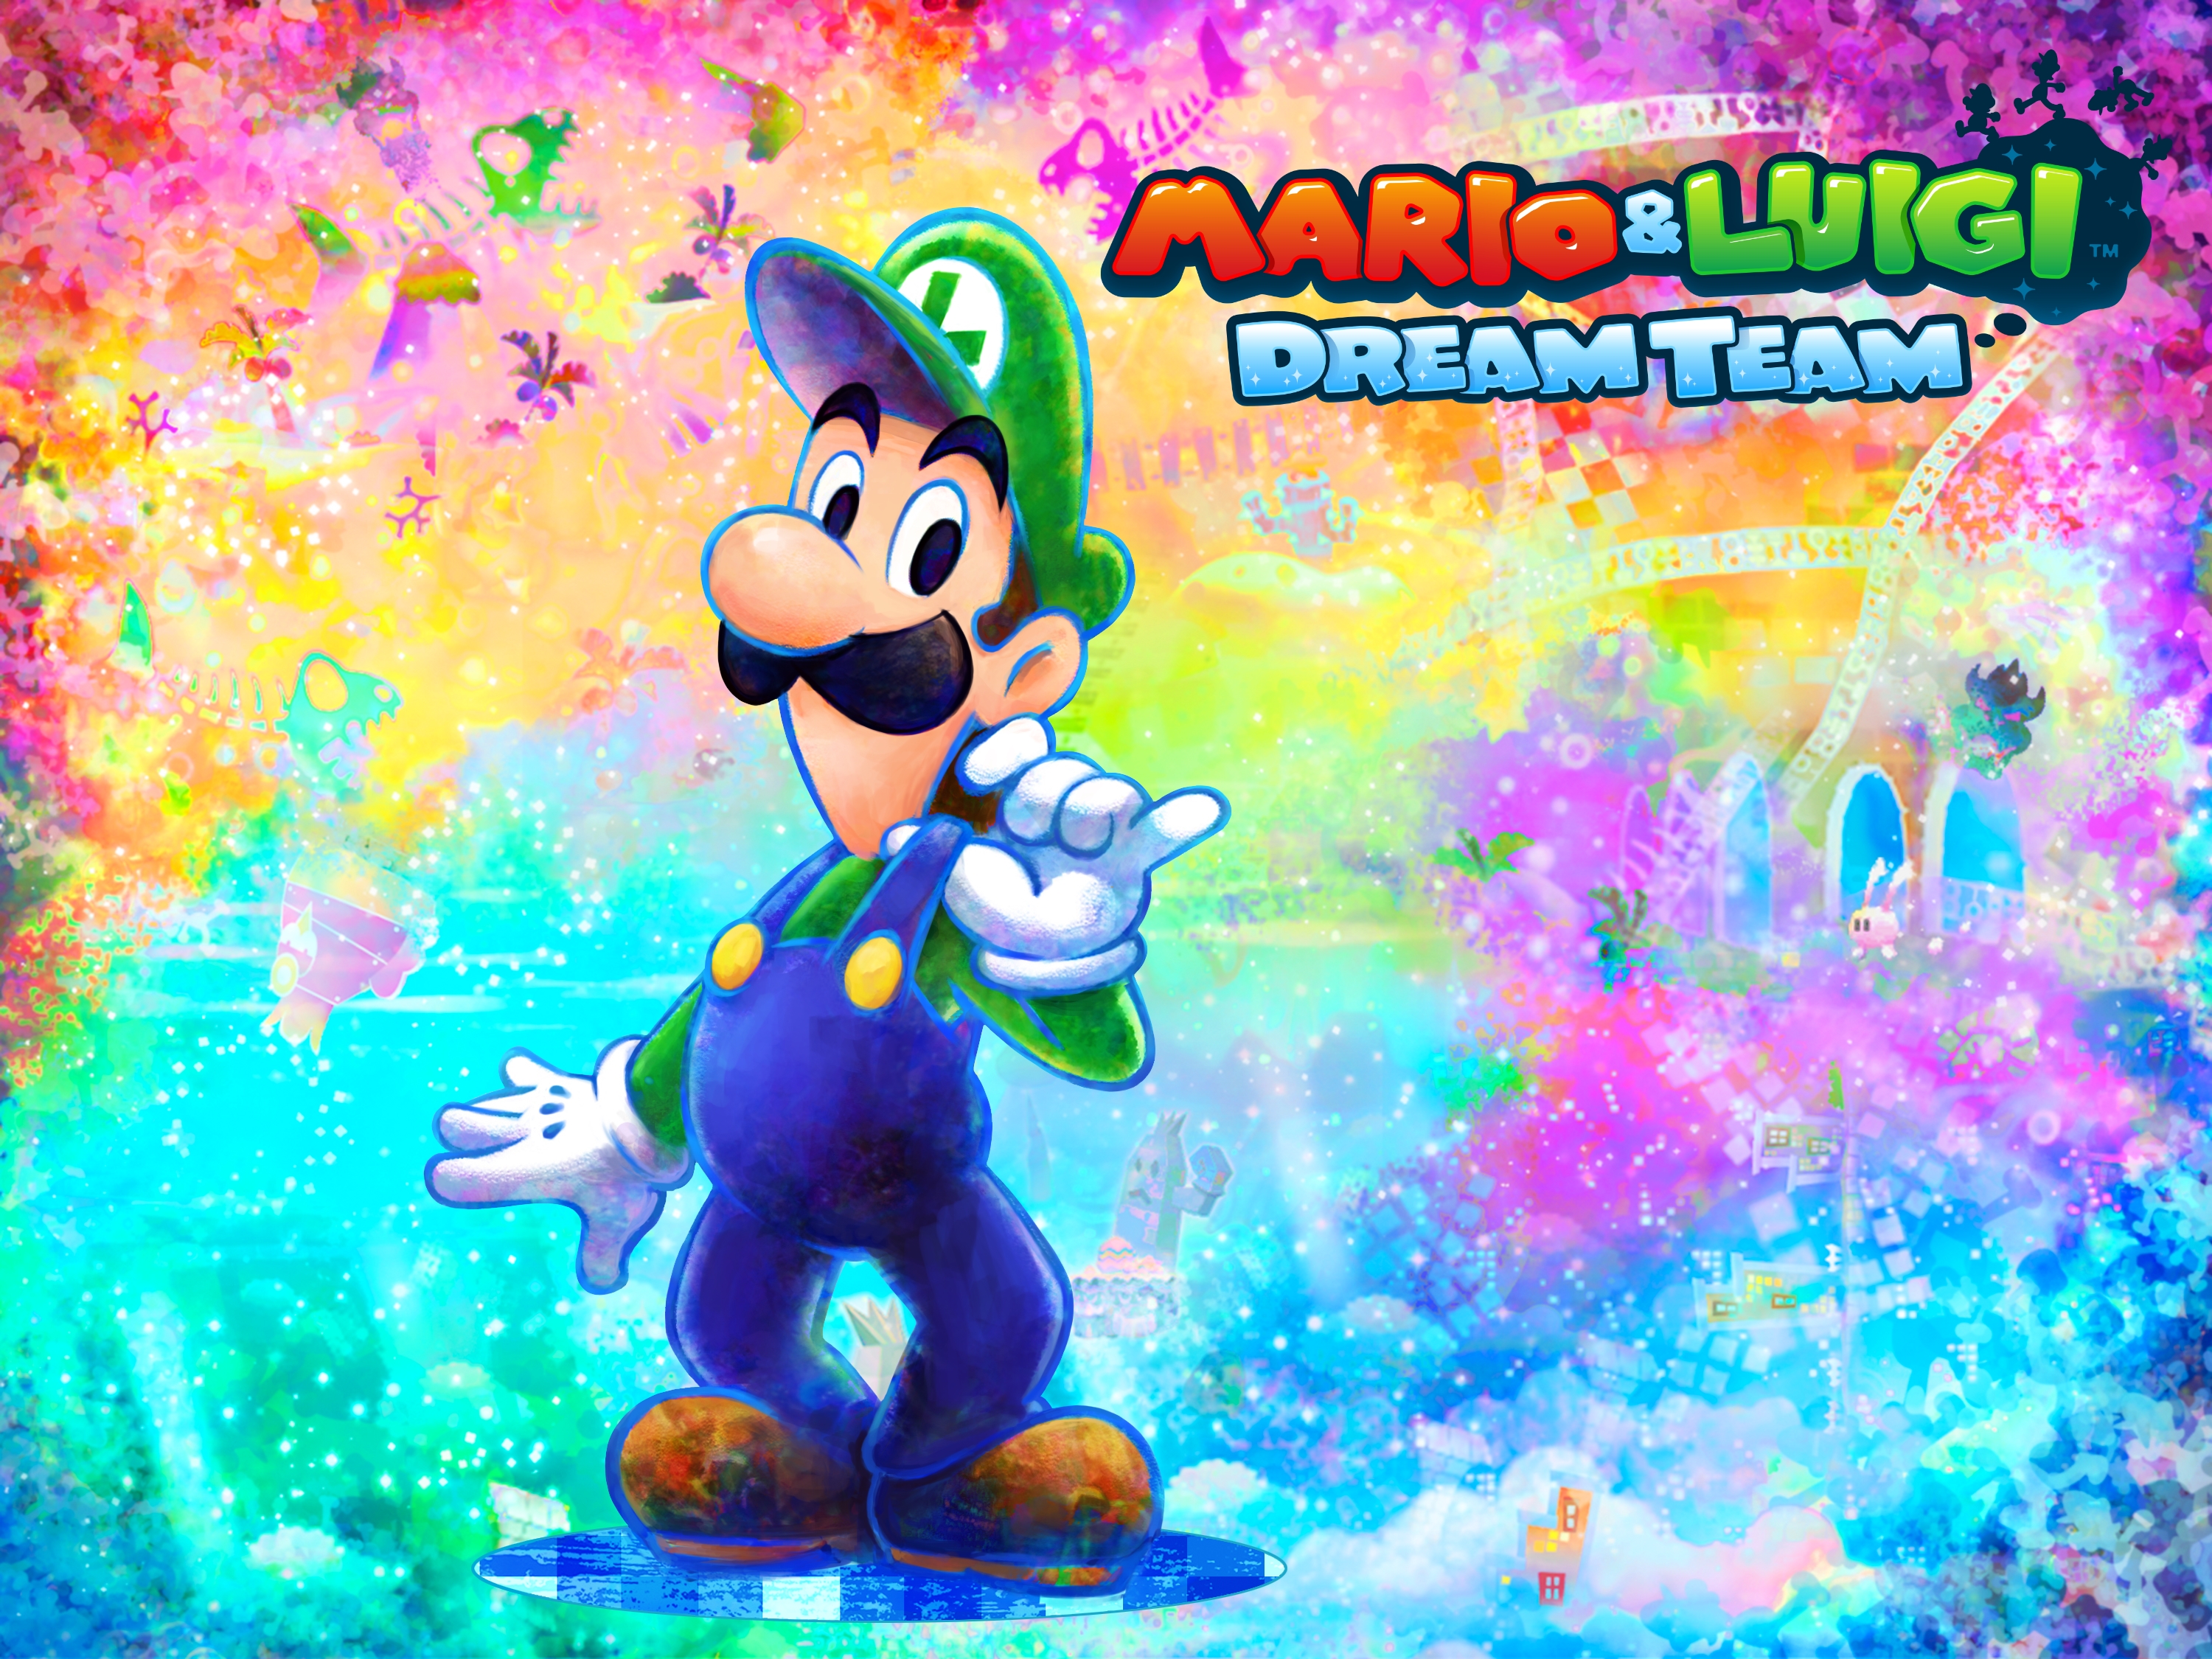 Mario and Luigi Dream Team Wallpaper by BowserJrSMB on DeviantArt